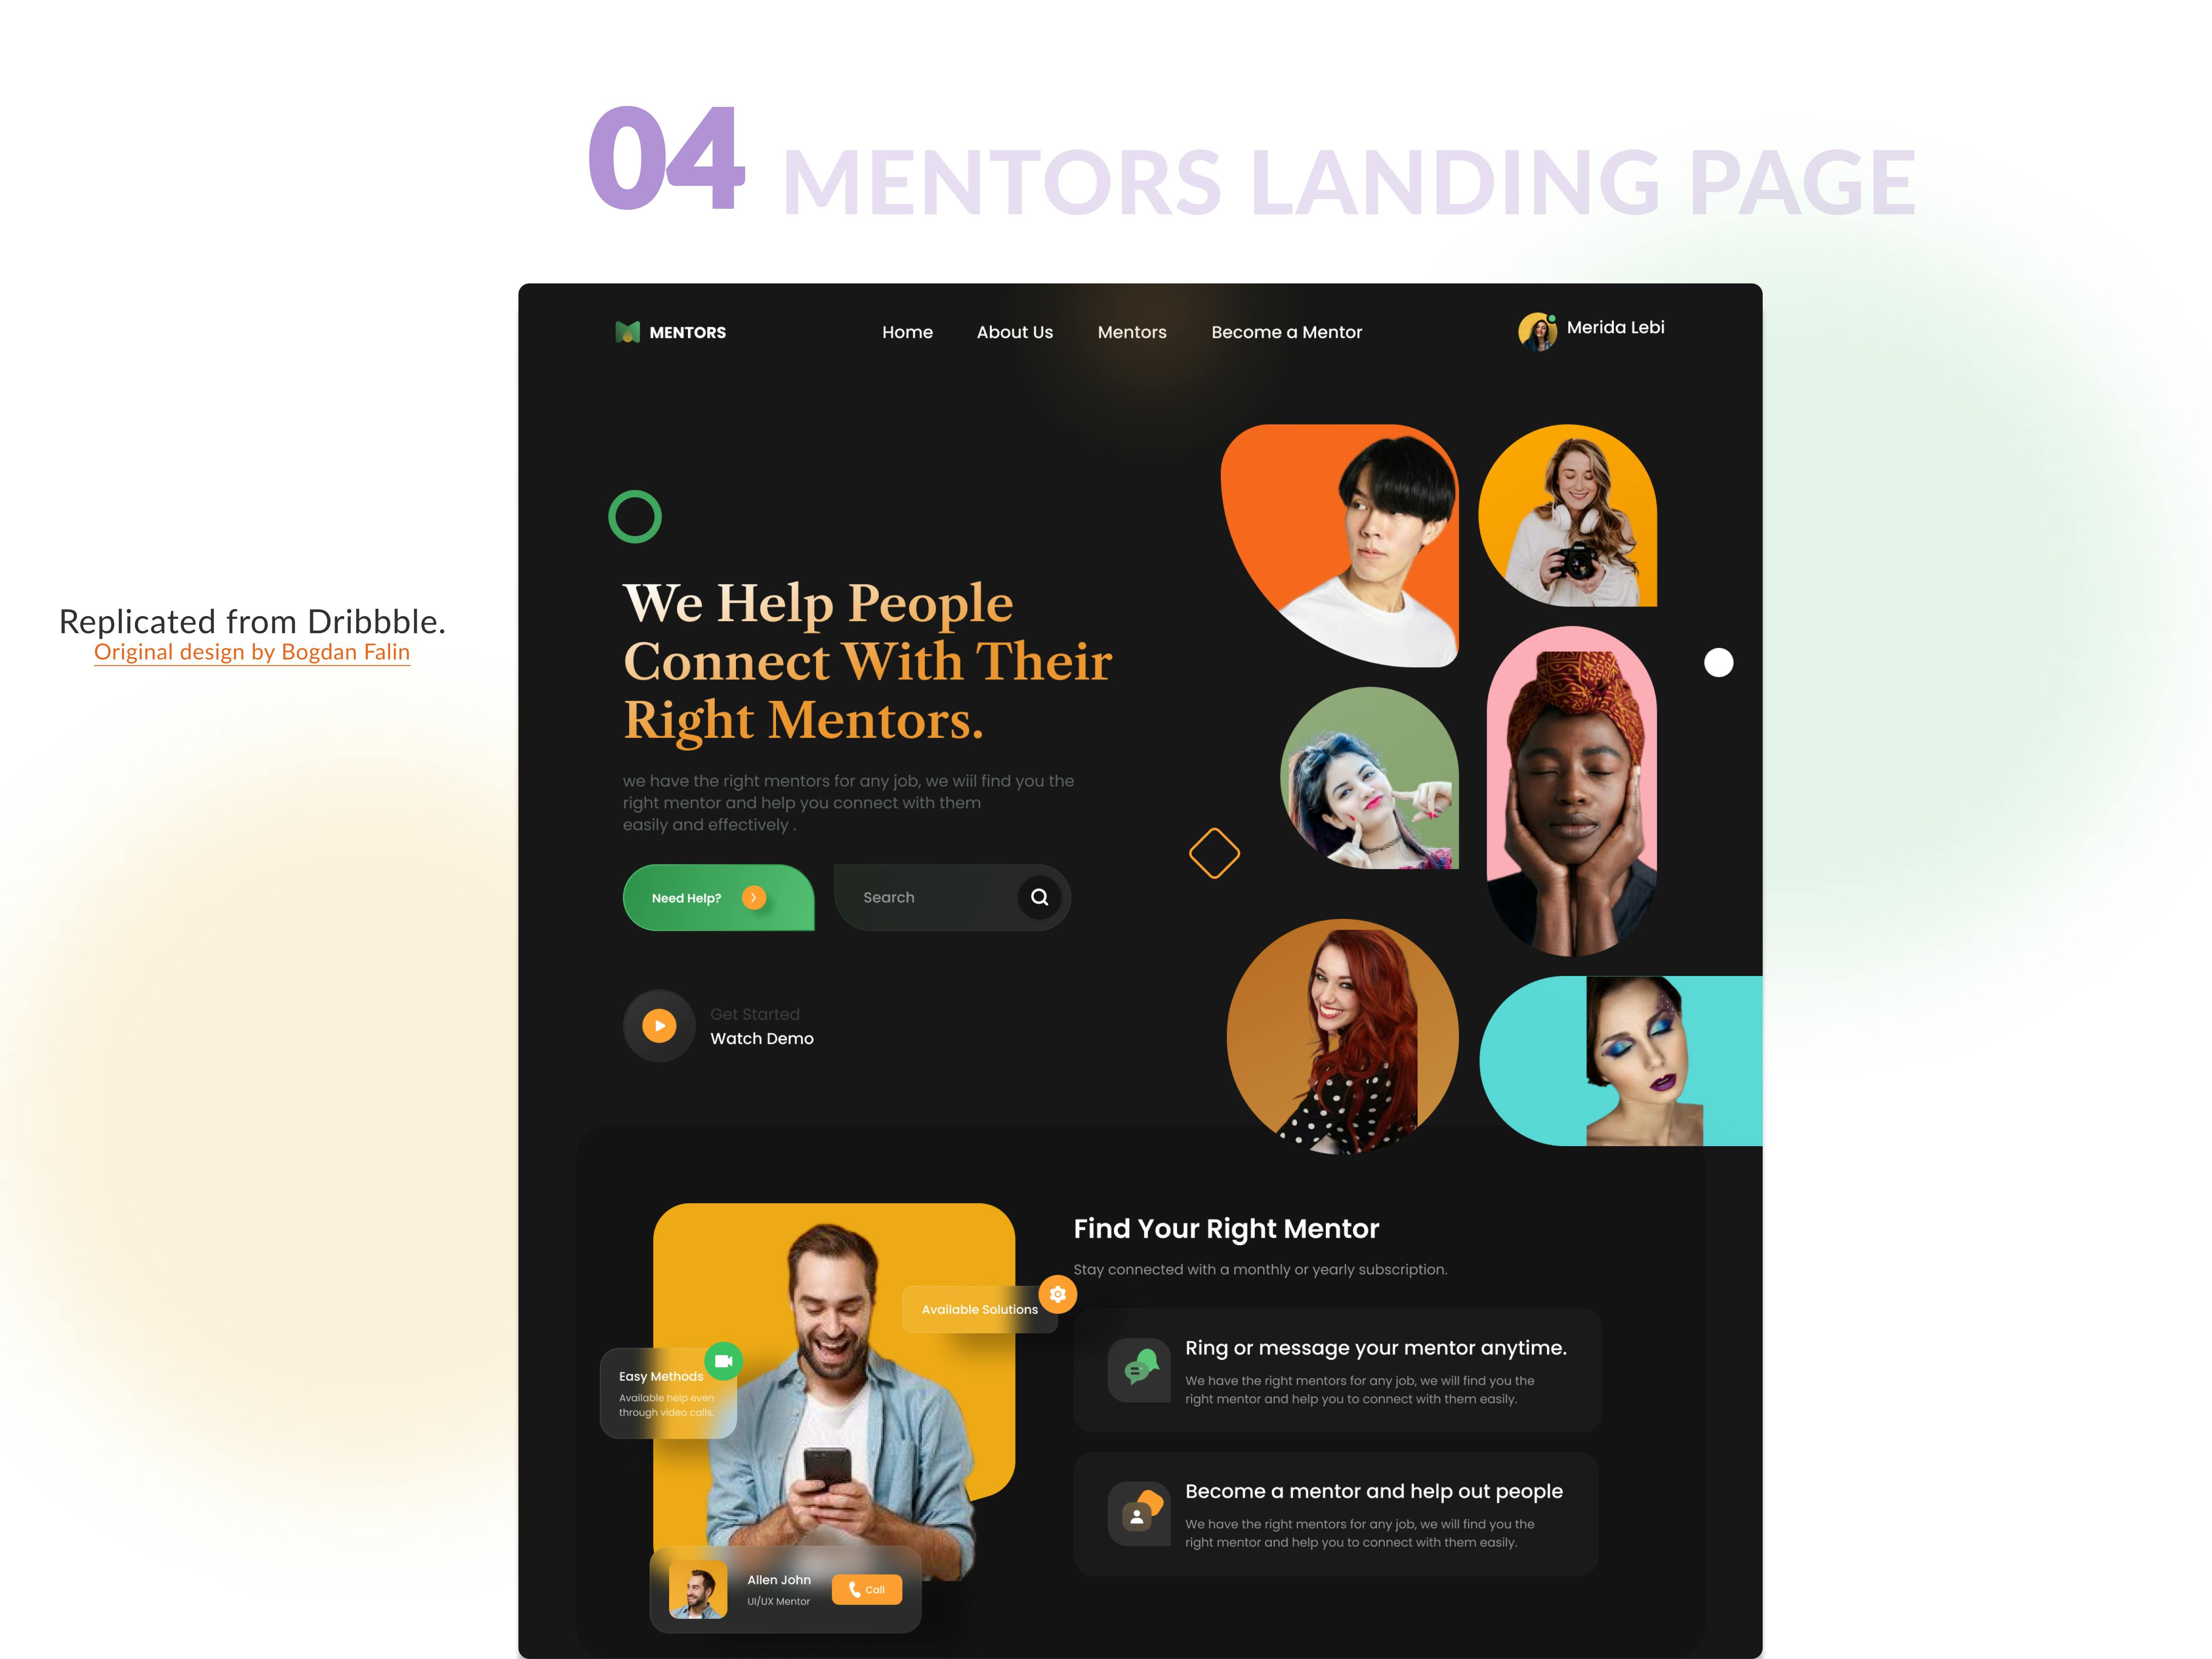 My design replica of mentors landing page